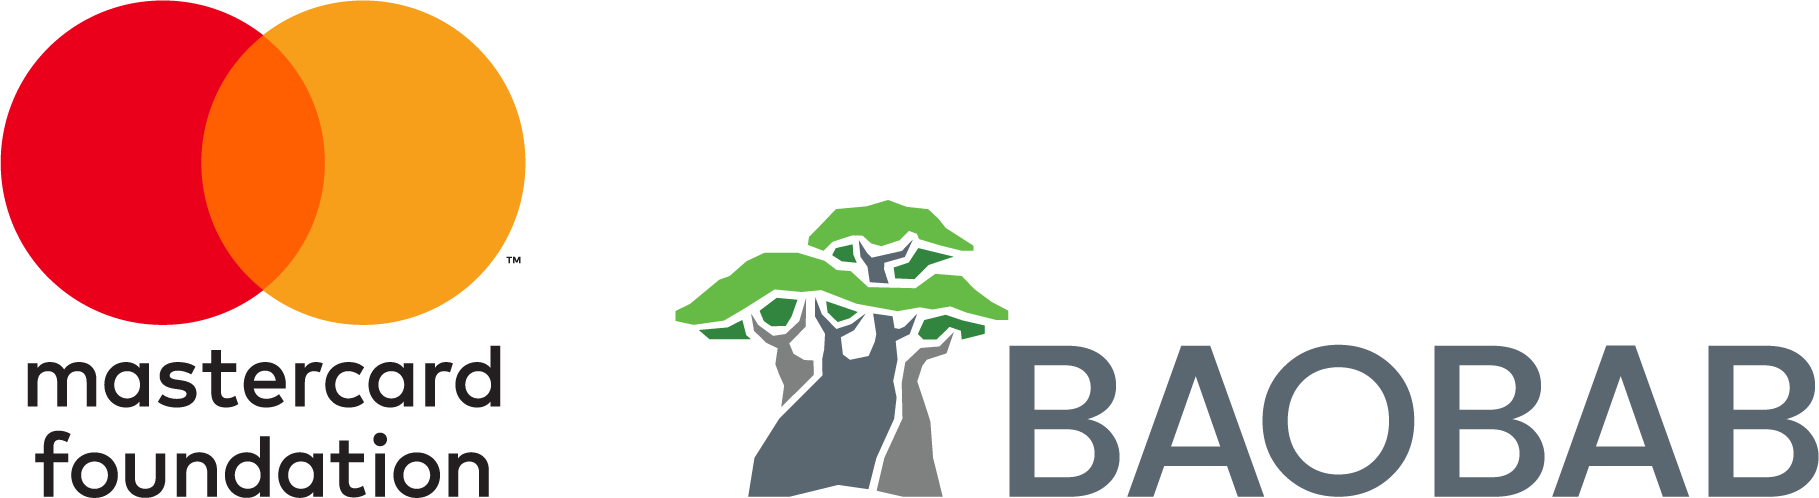 mastercard foundation and BAOBAB